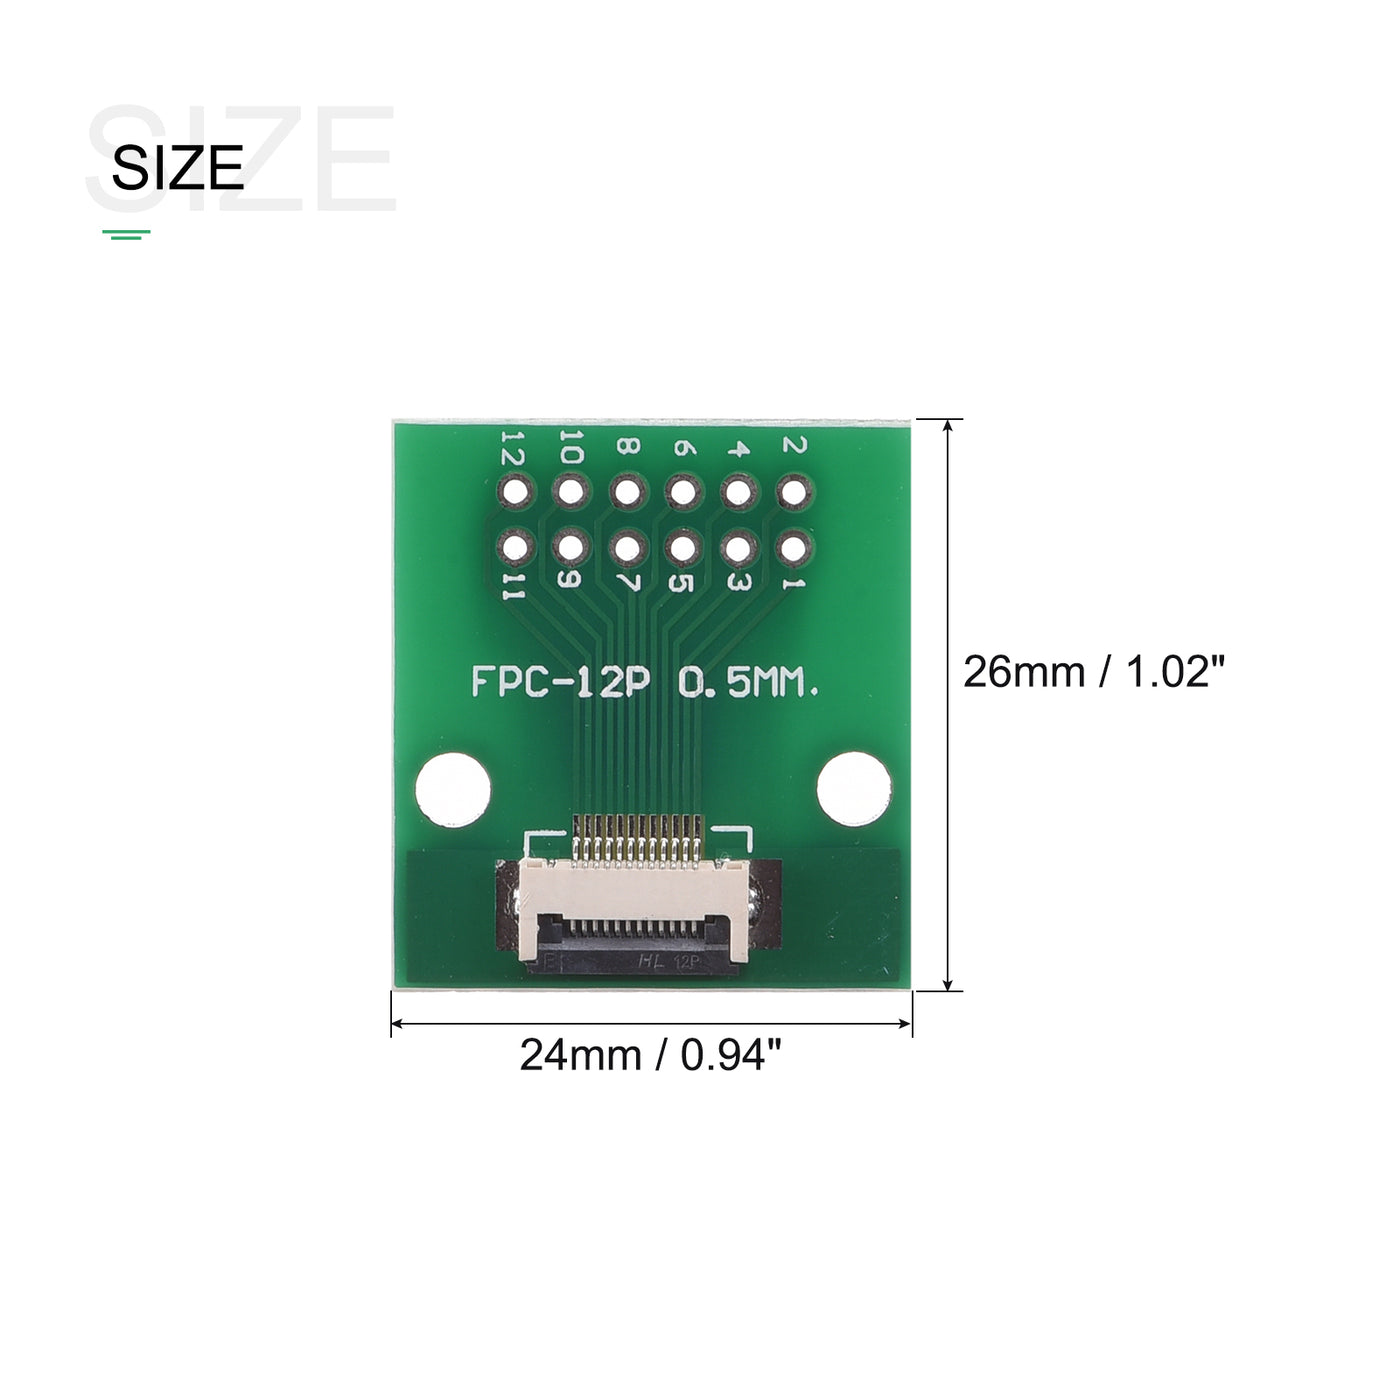 Harfington FPC Converter Board 12P 0.5mm on Socket Side, Back 1.0mm, to DIP 2.54mm 5pcs